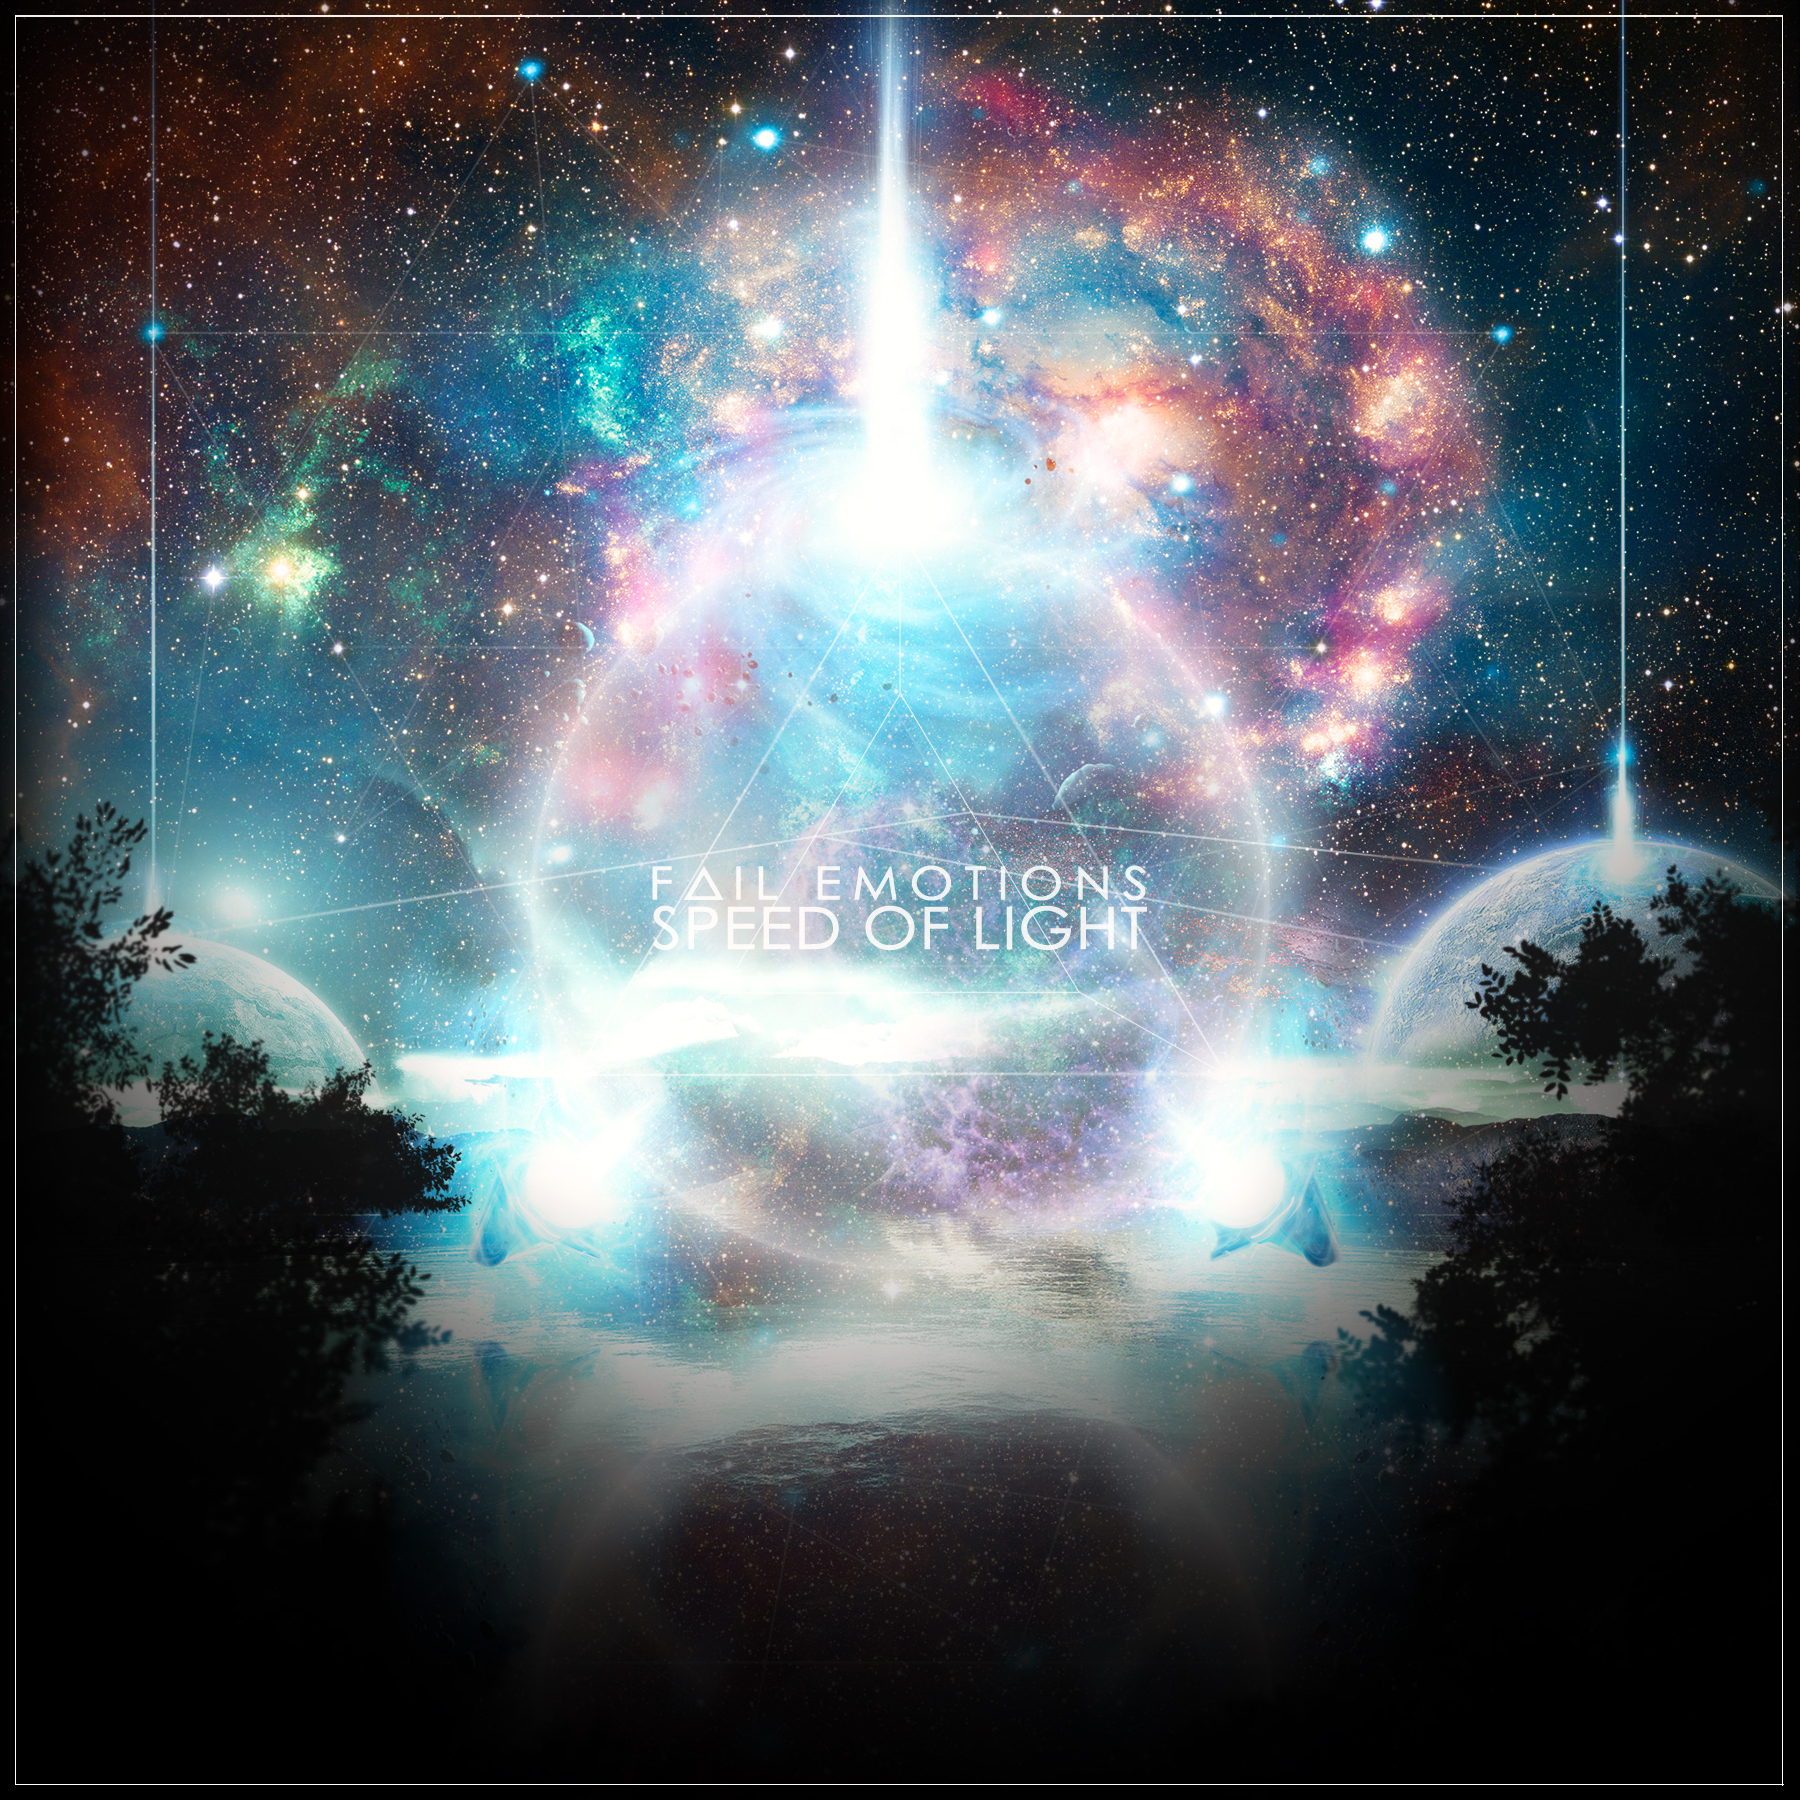 Fail Emotions - Speed Of Light [EP] (2012) » CORE RADIO!